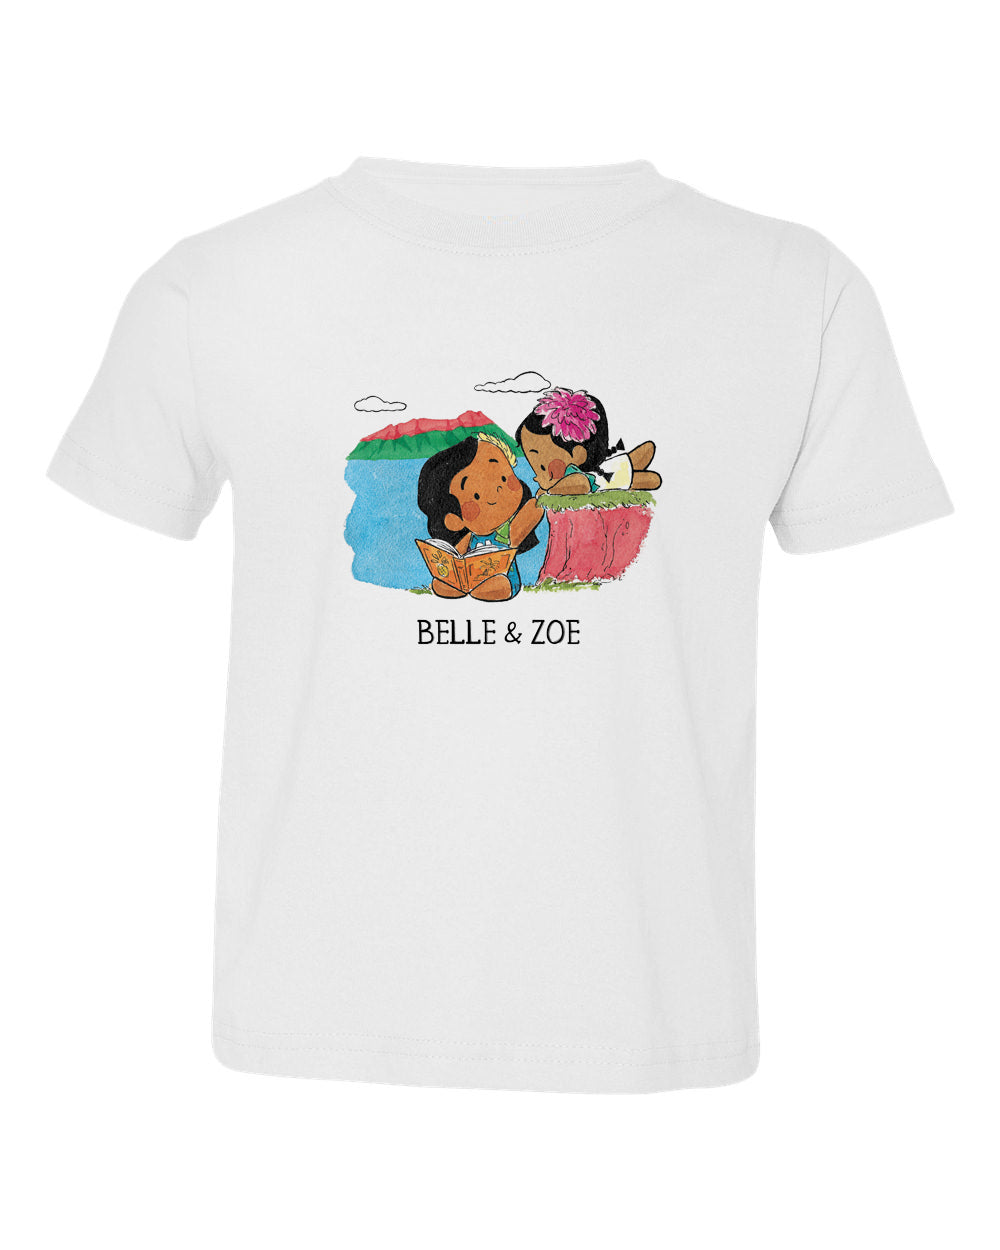 Belle & Zoe Reading KIDS Tee-Shirts